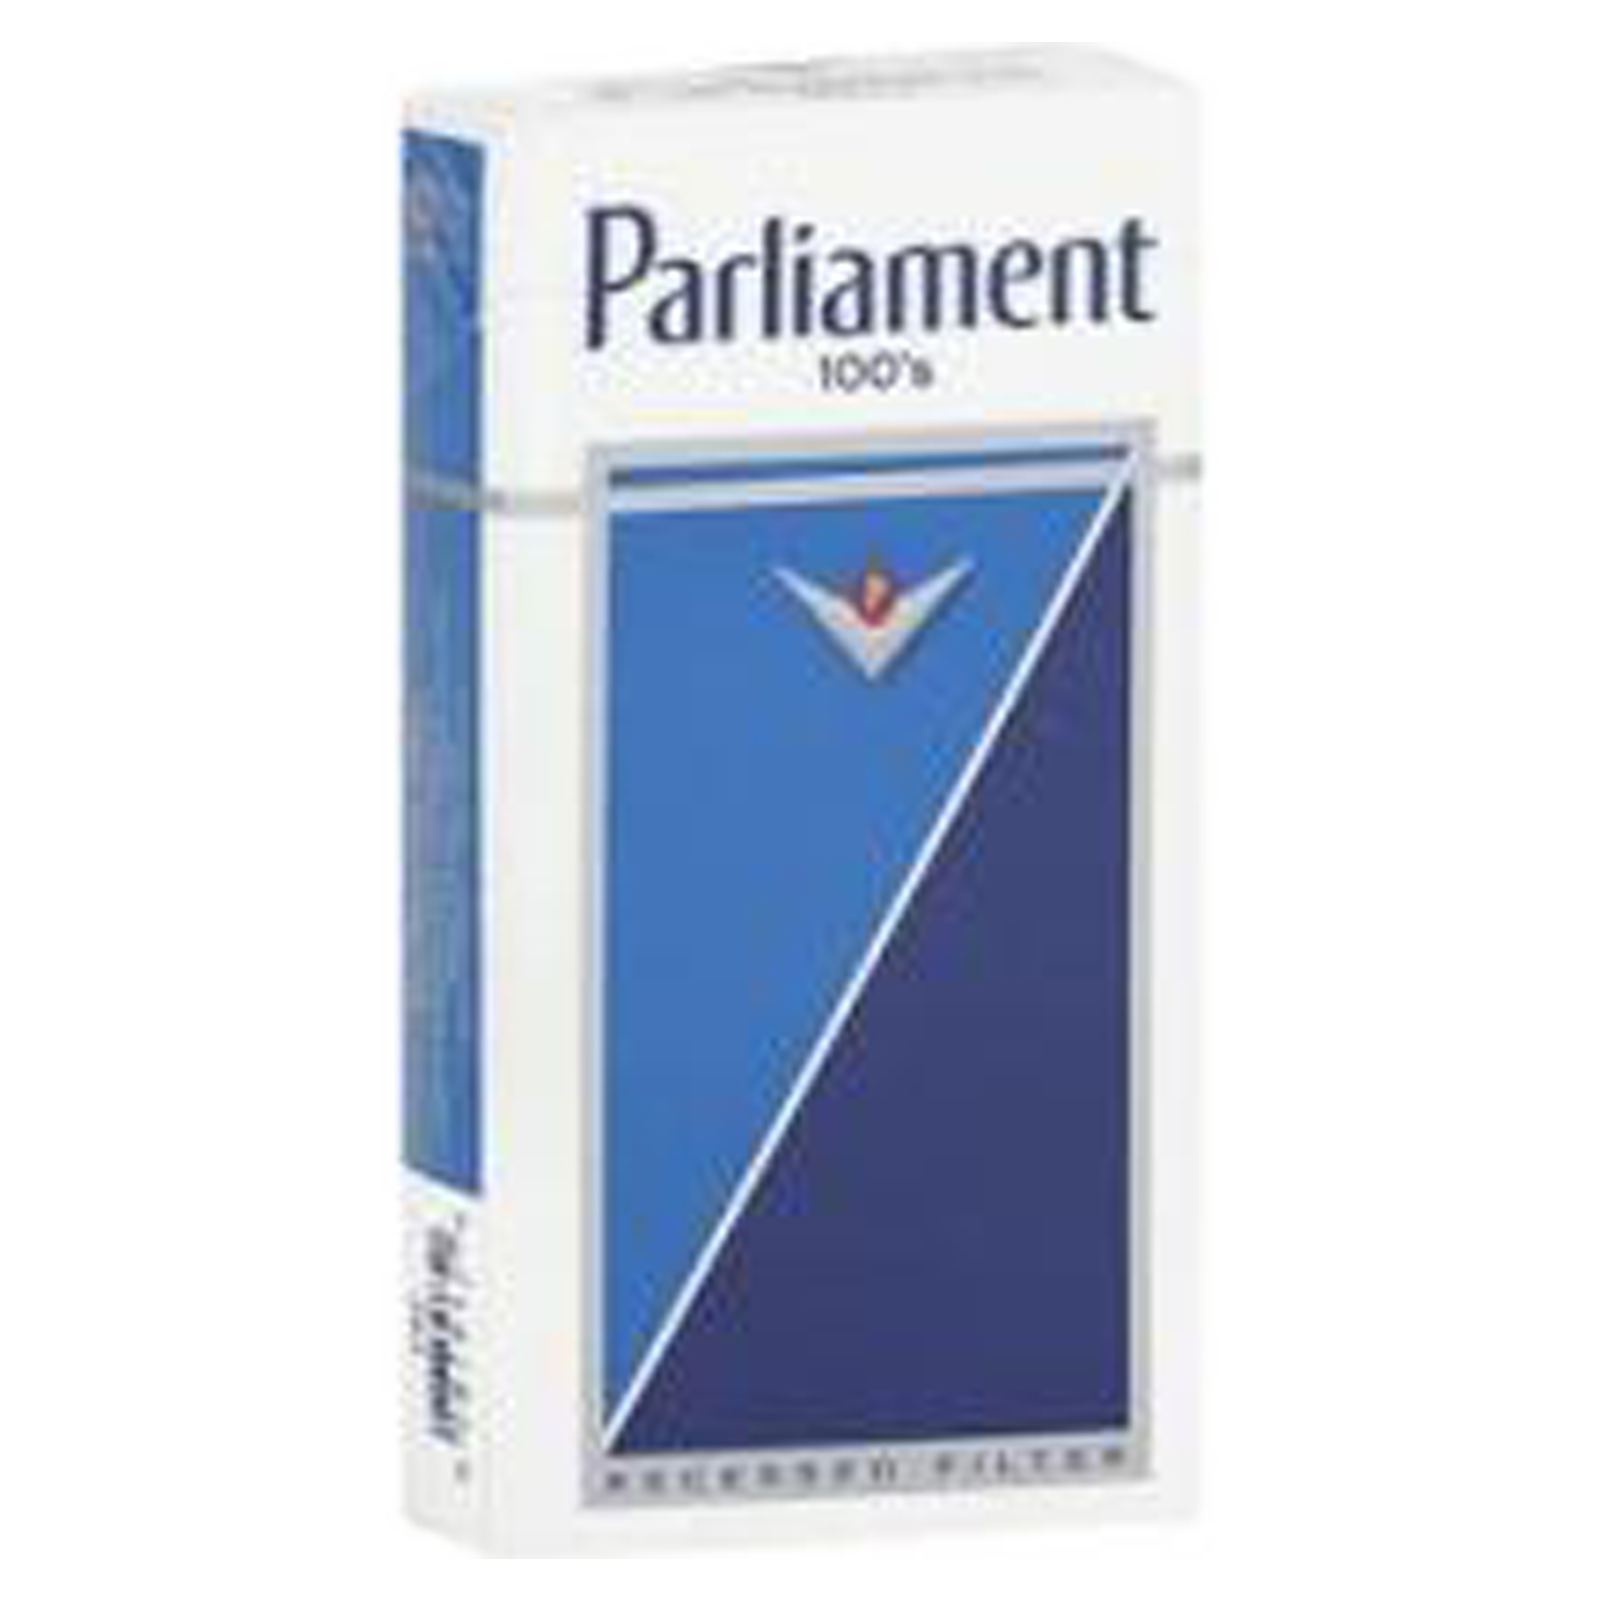 Parliament White 100s Cigarettes 20ct Box 1pk